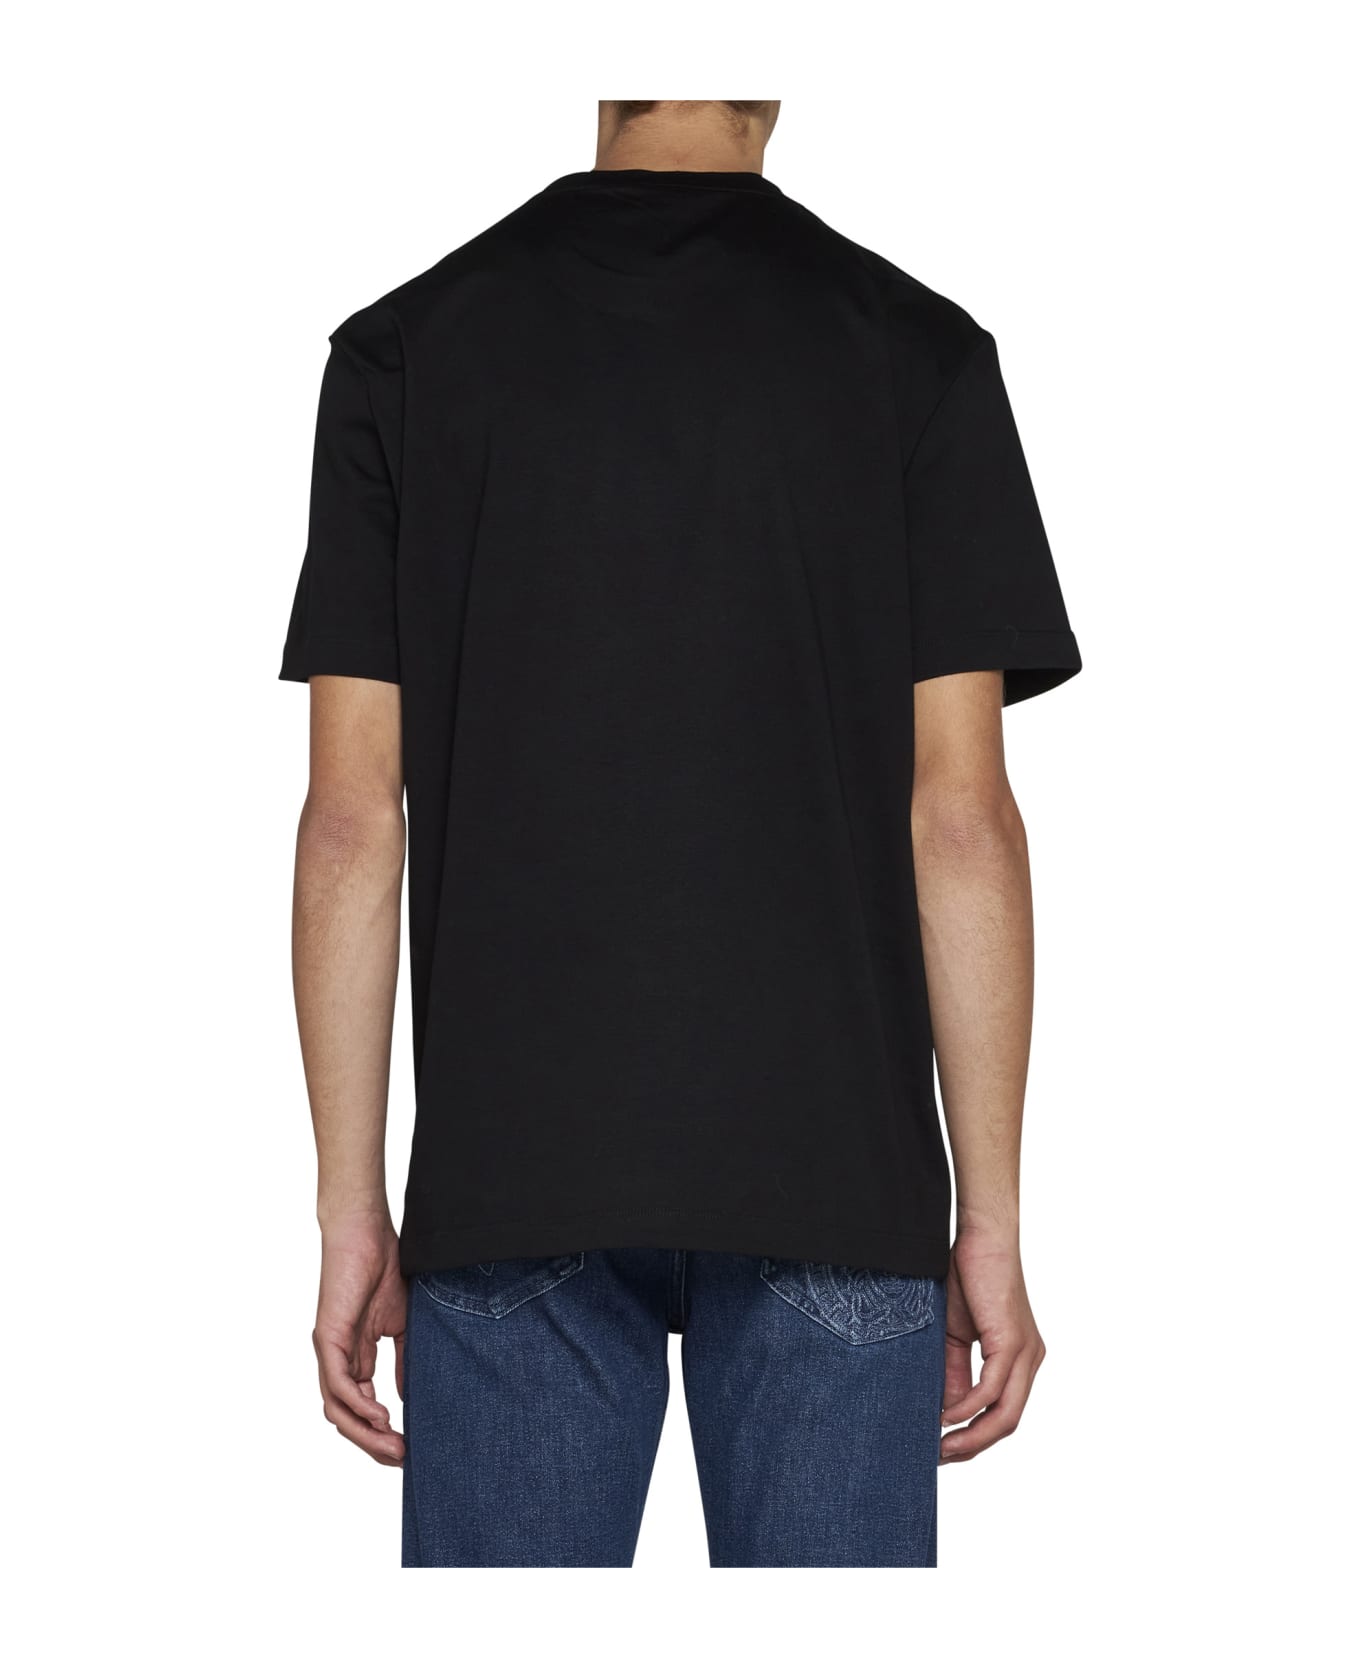 Versace Black T-shirt With Logo - Black